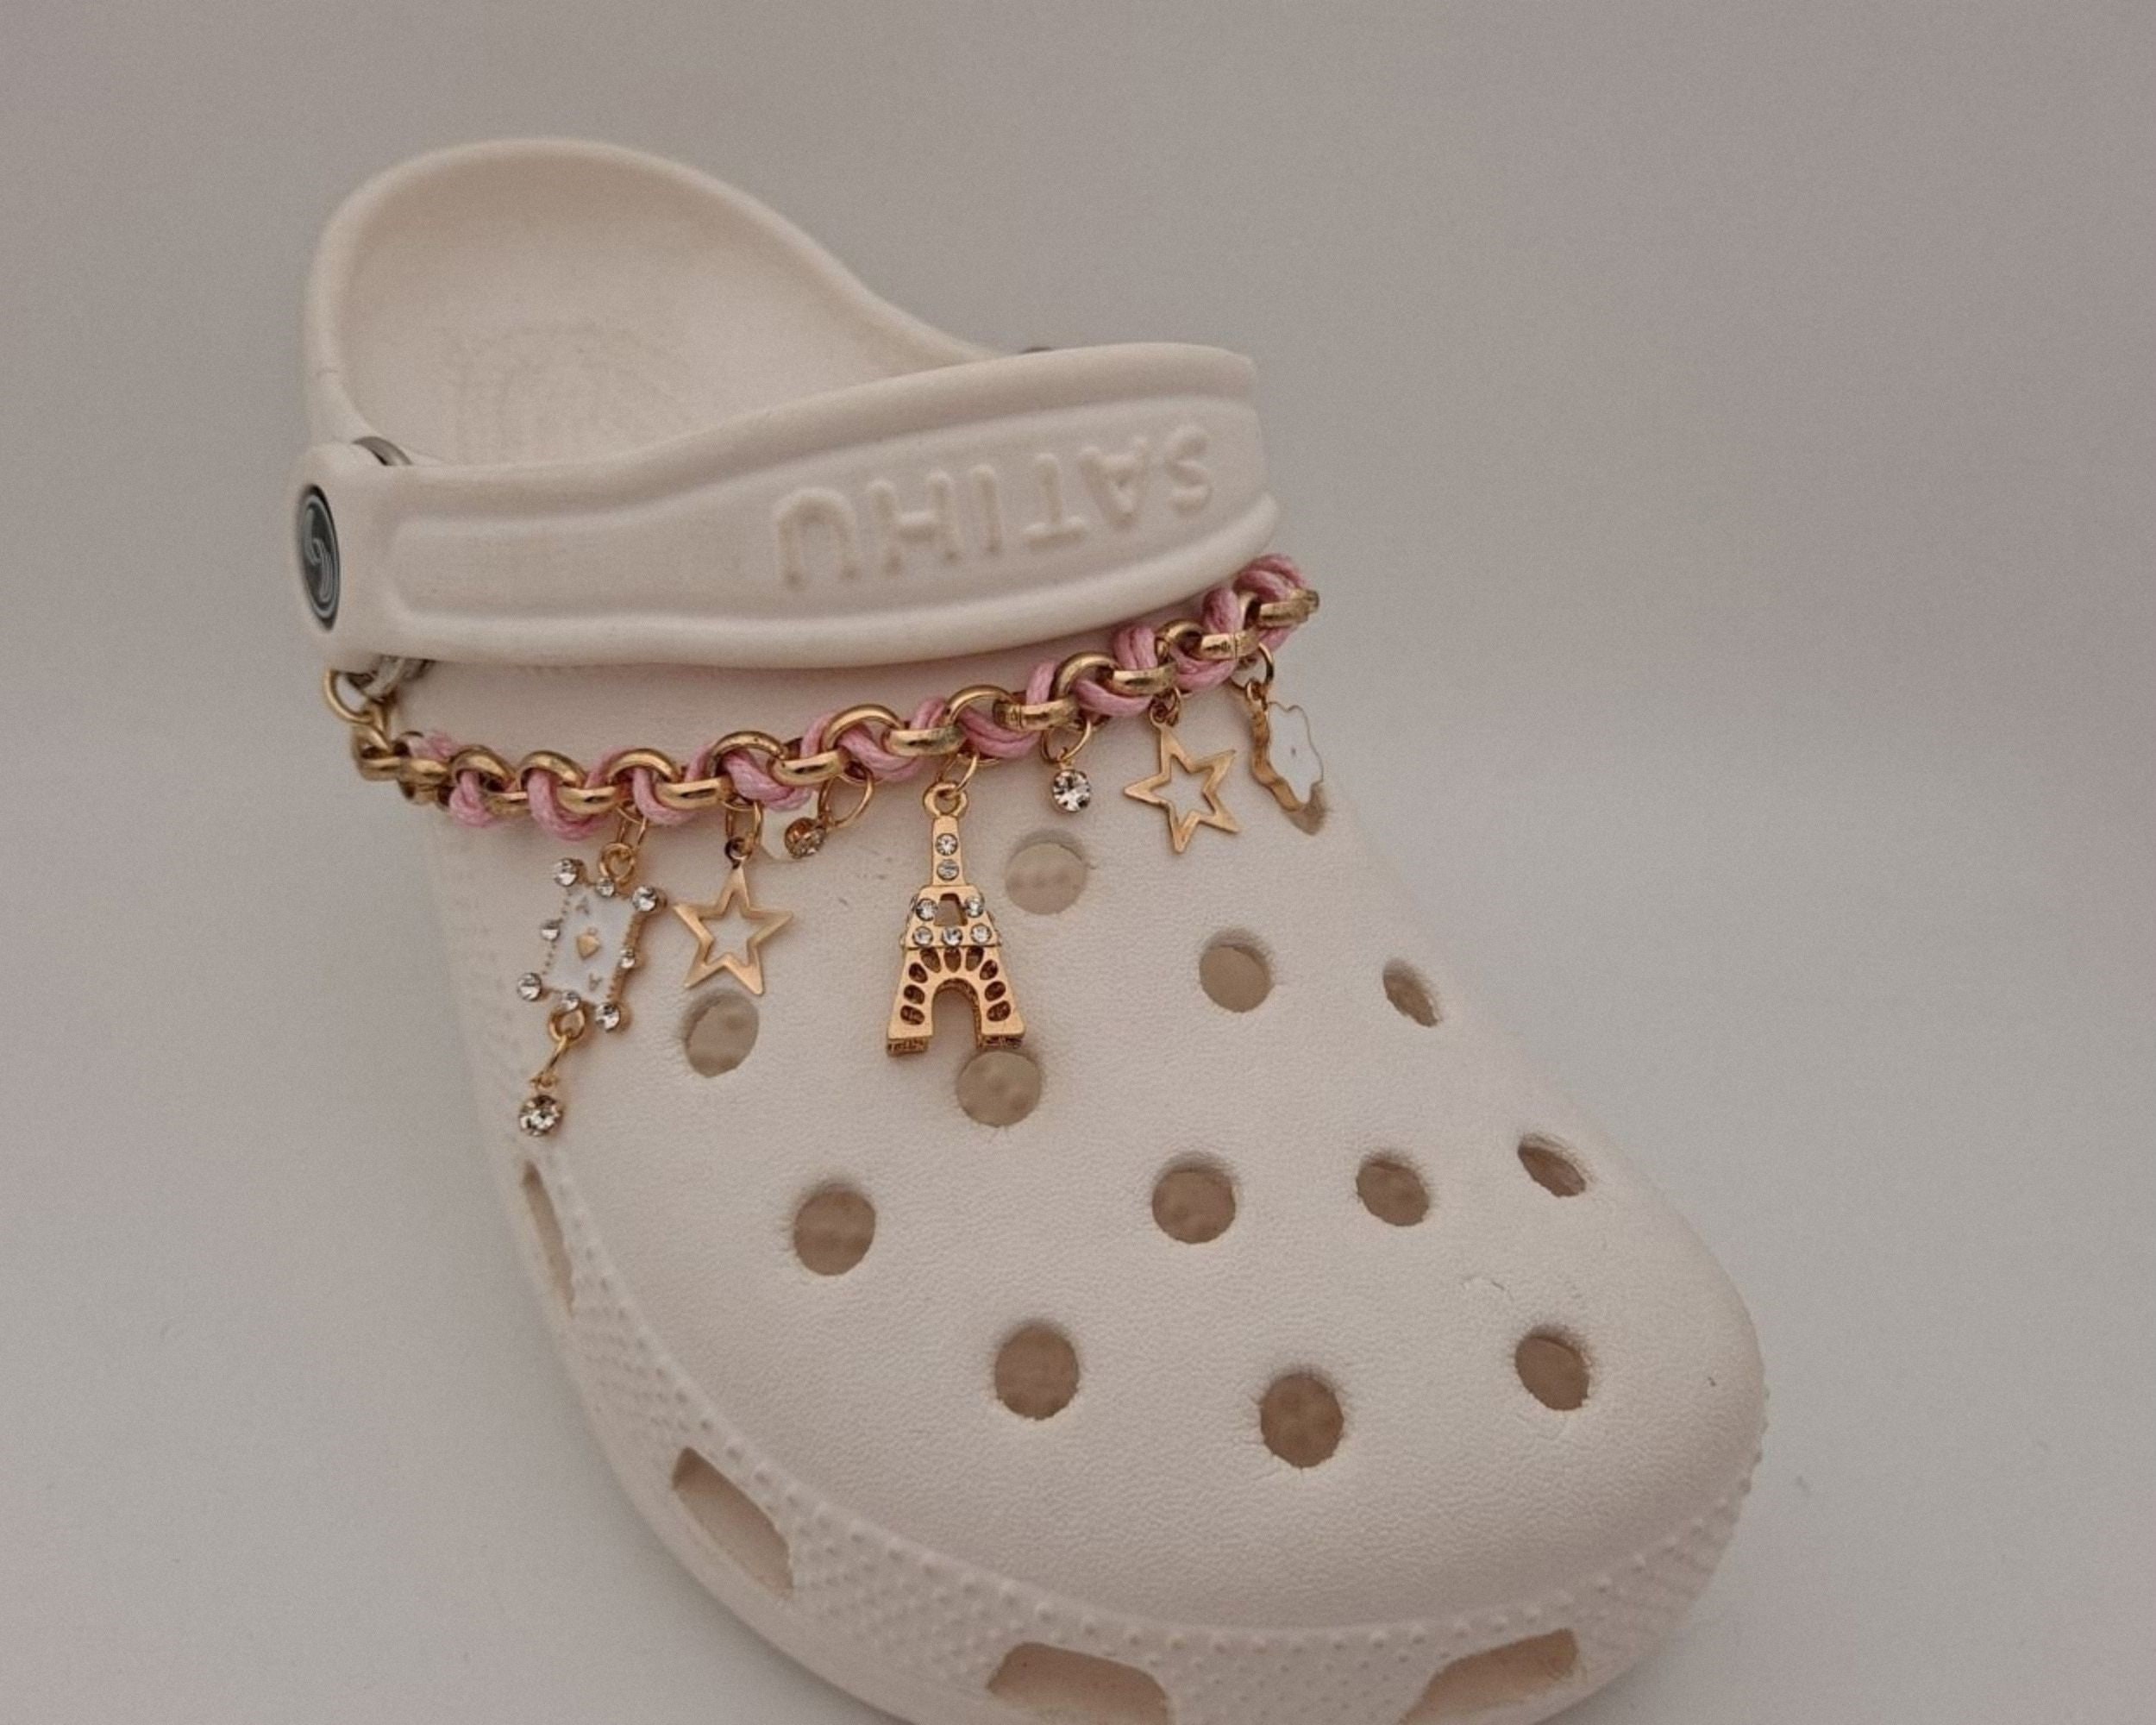 CACOLULU Bling Croc Charms for Women - 19pcs Shoe Charms for Croc Jewelry Charms for Kids/girls/teens/adult/boys Croc Pins, Trendy Designer Croc